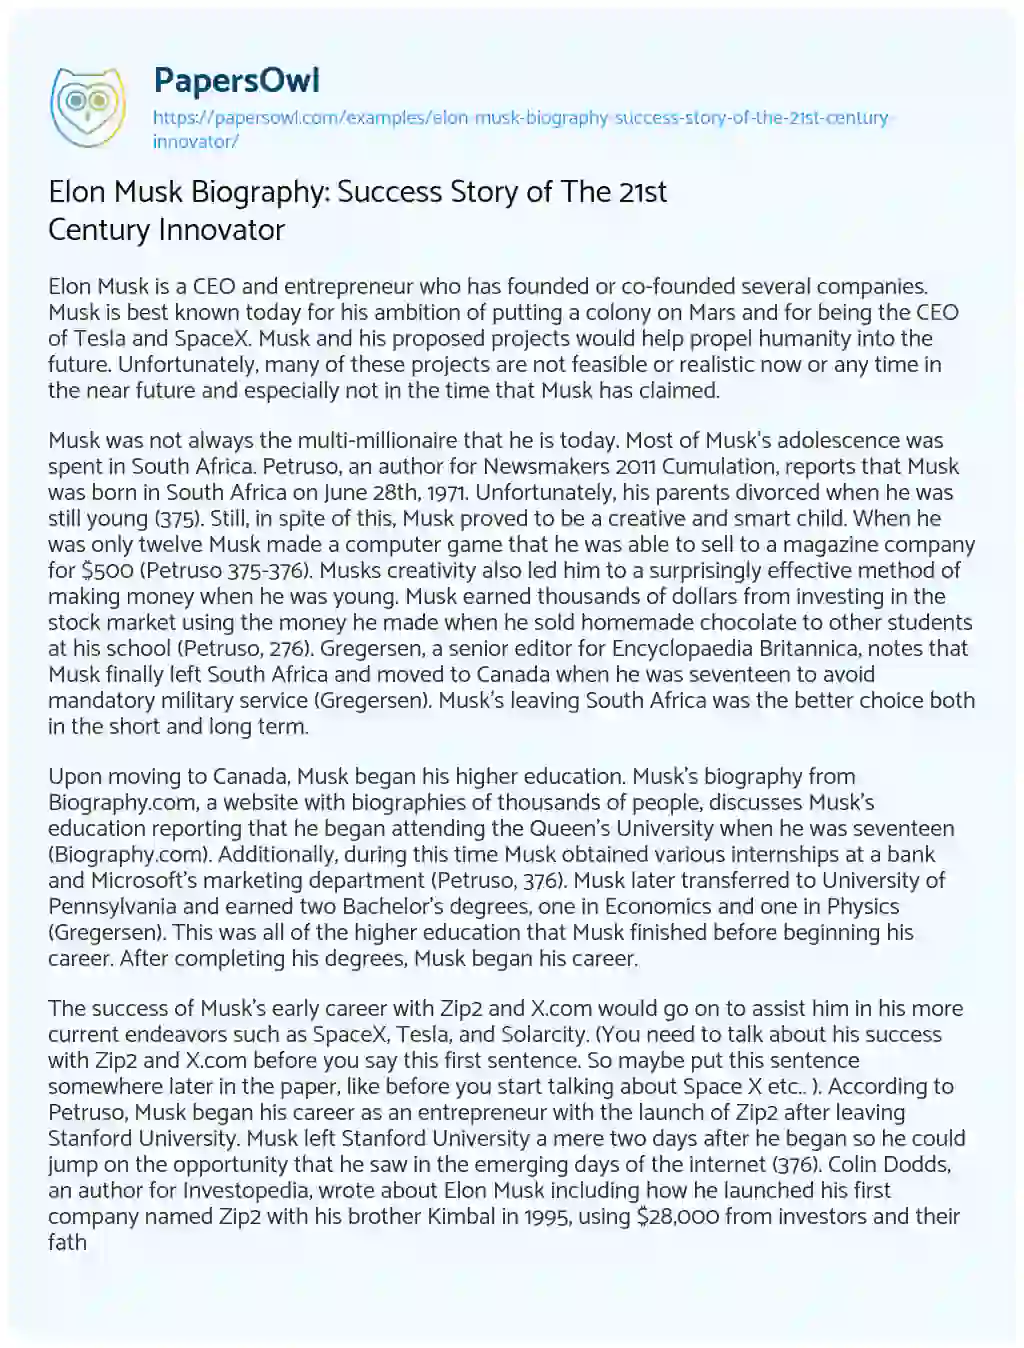 Elon Musk Biography: Success Story of the 21st Century Innovator essay